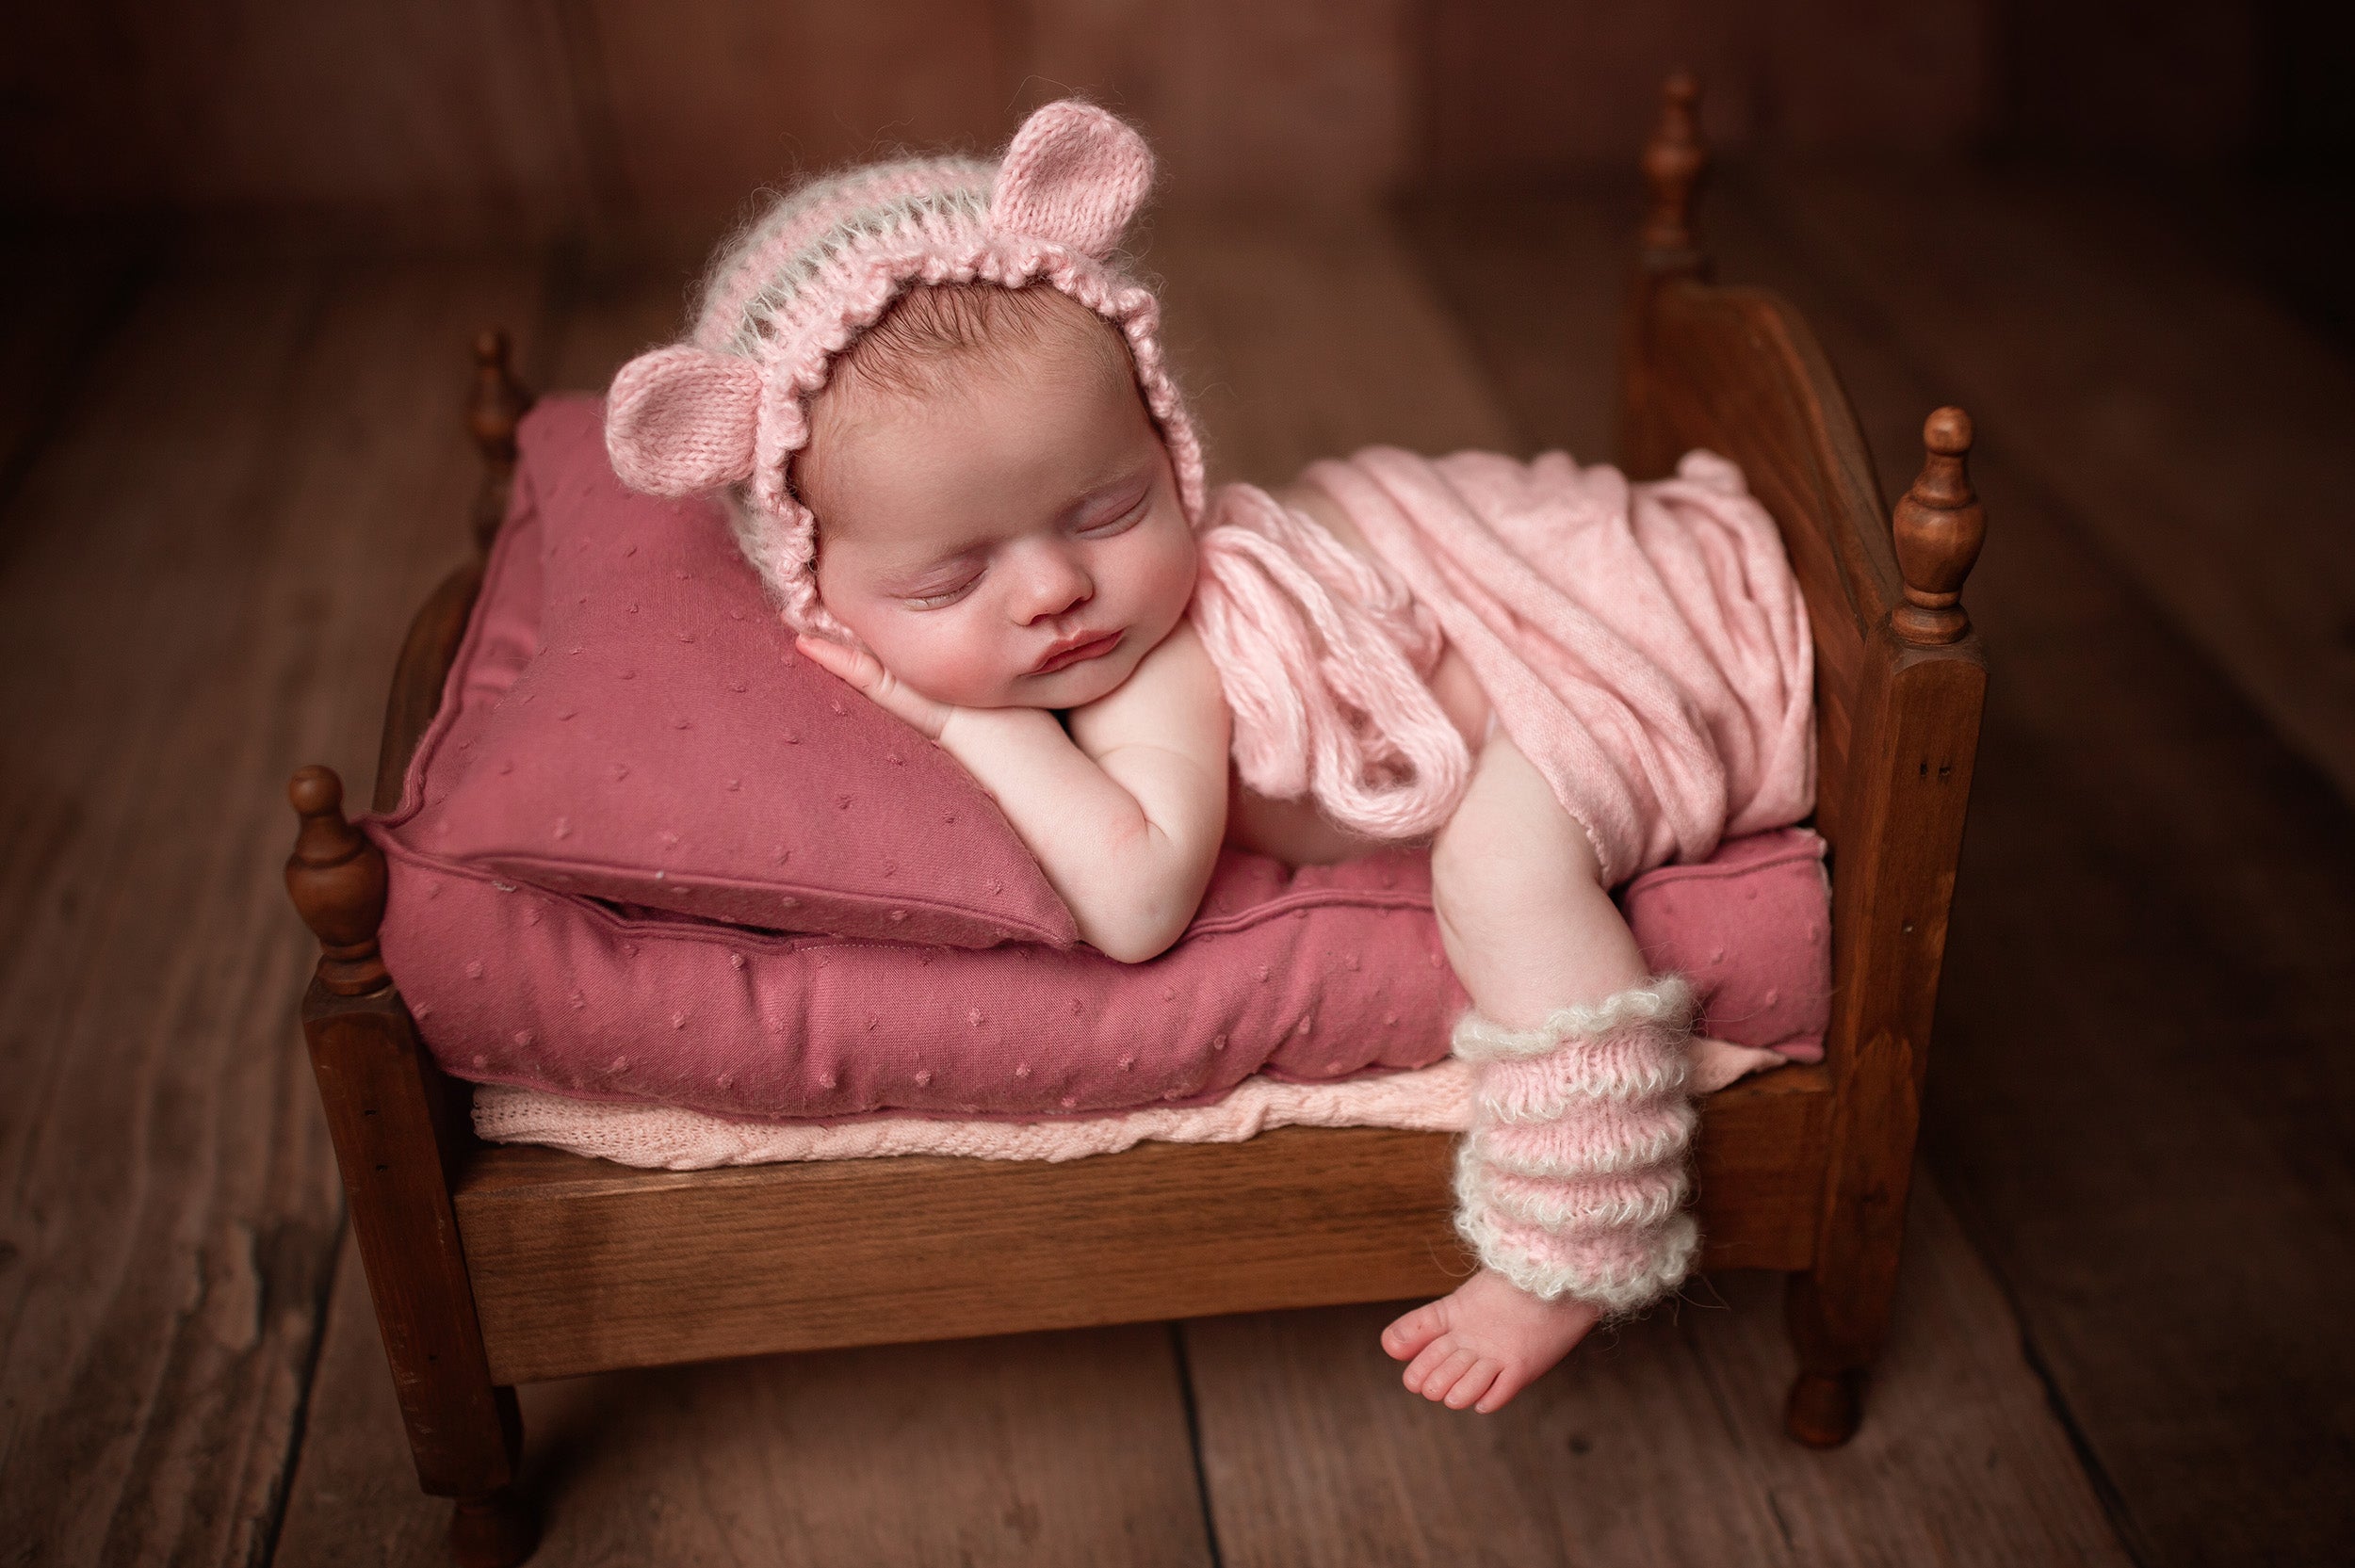 Knit Newborn Bear Bonnet and Leg Warmers Set- Soft Pink Ruth- Made To Order